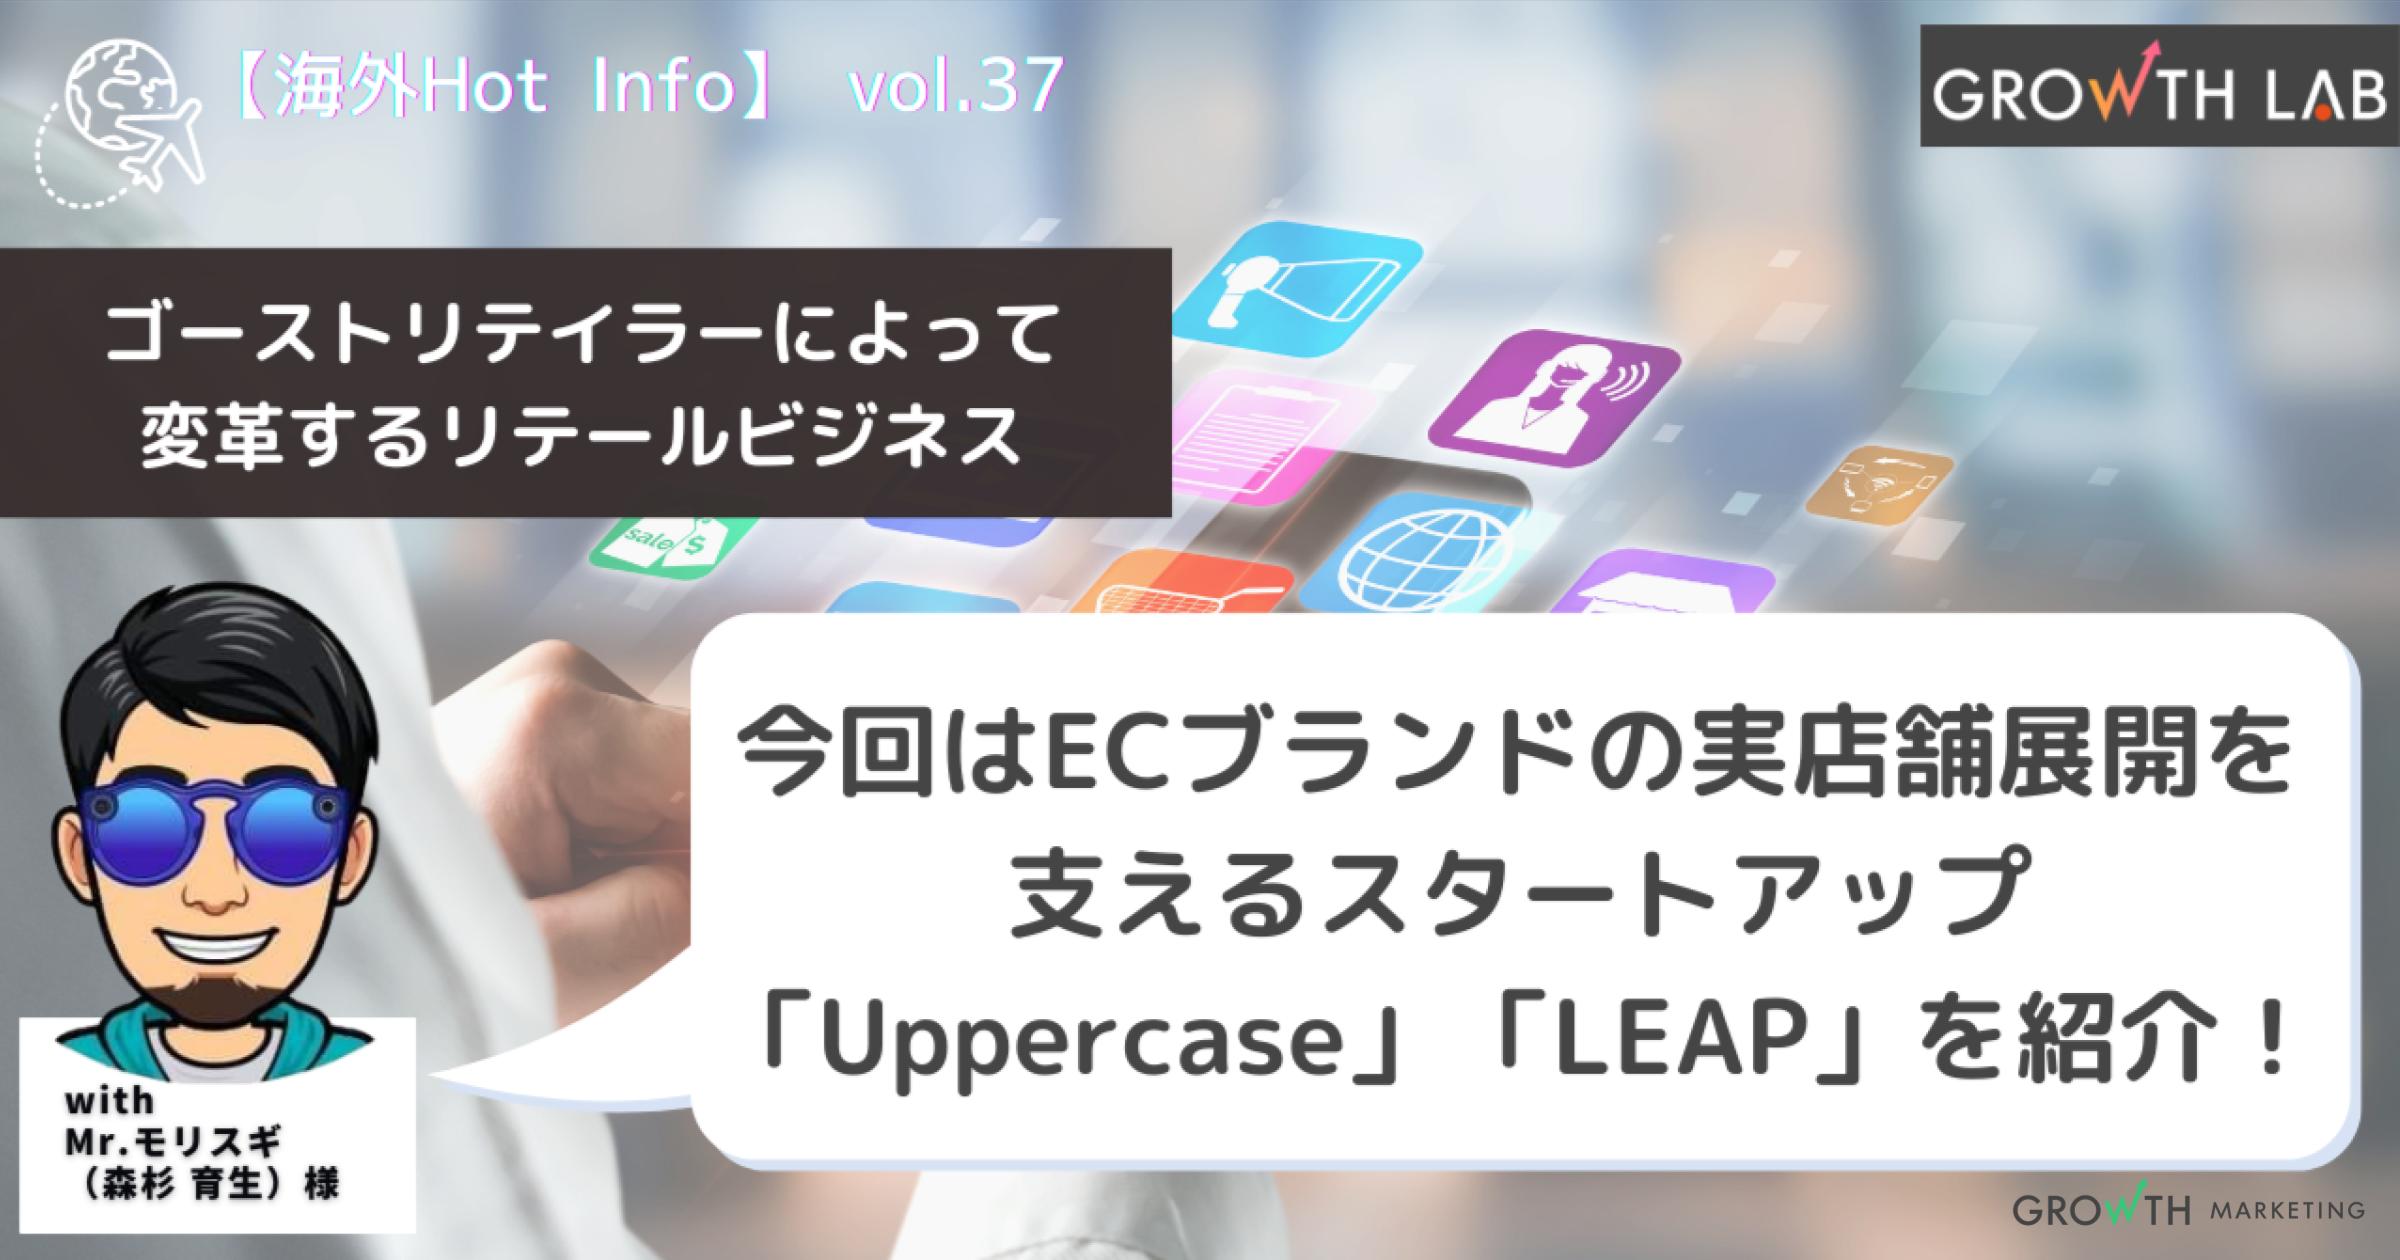 ECブランドの実店舗展開を支えるスタートアップ「Uppercase」「LEAP」をご紹介！【海外Hot Info】vol.37